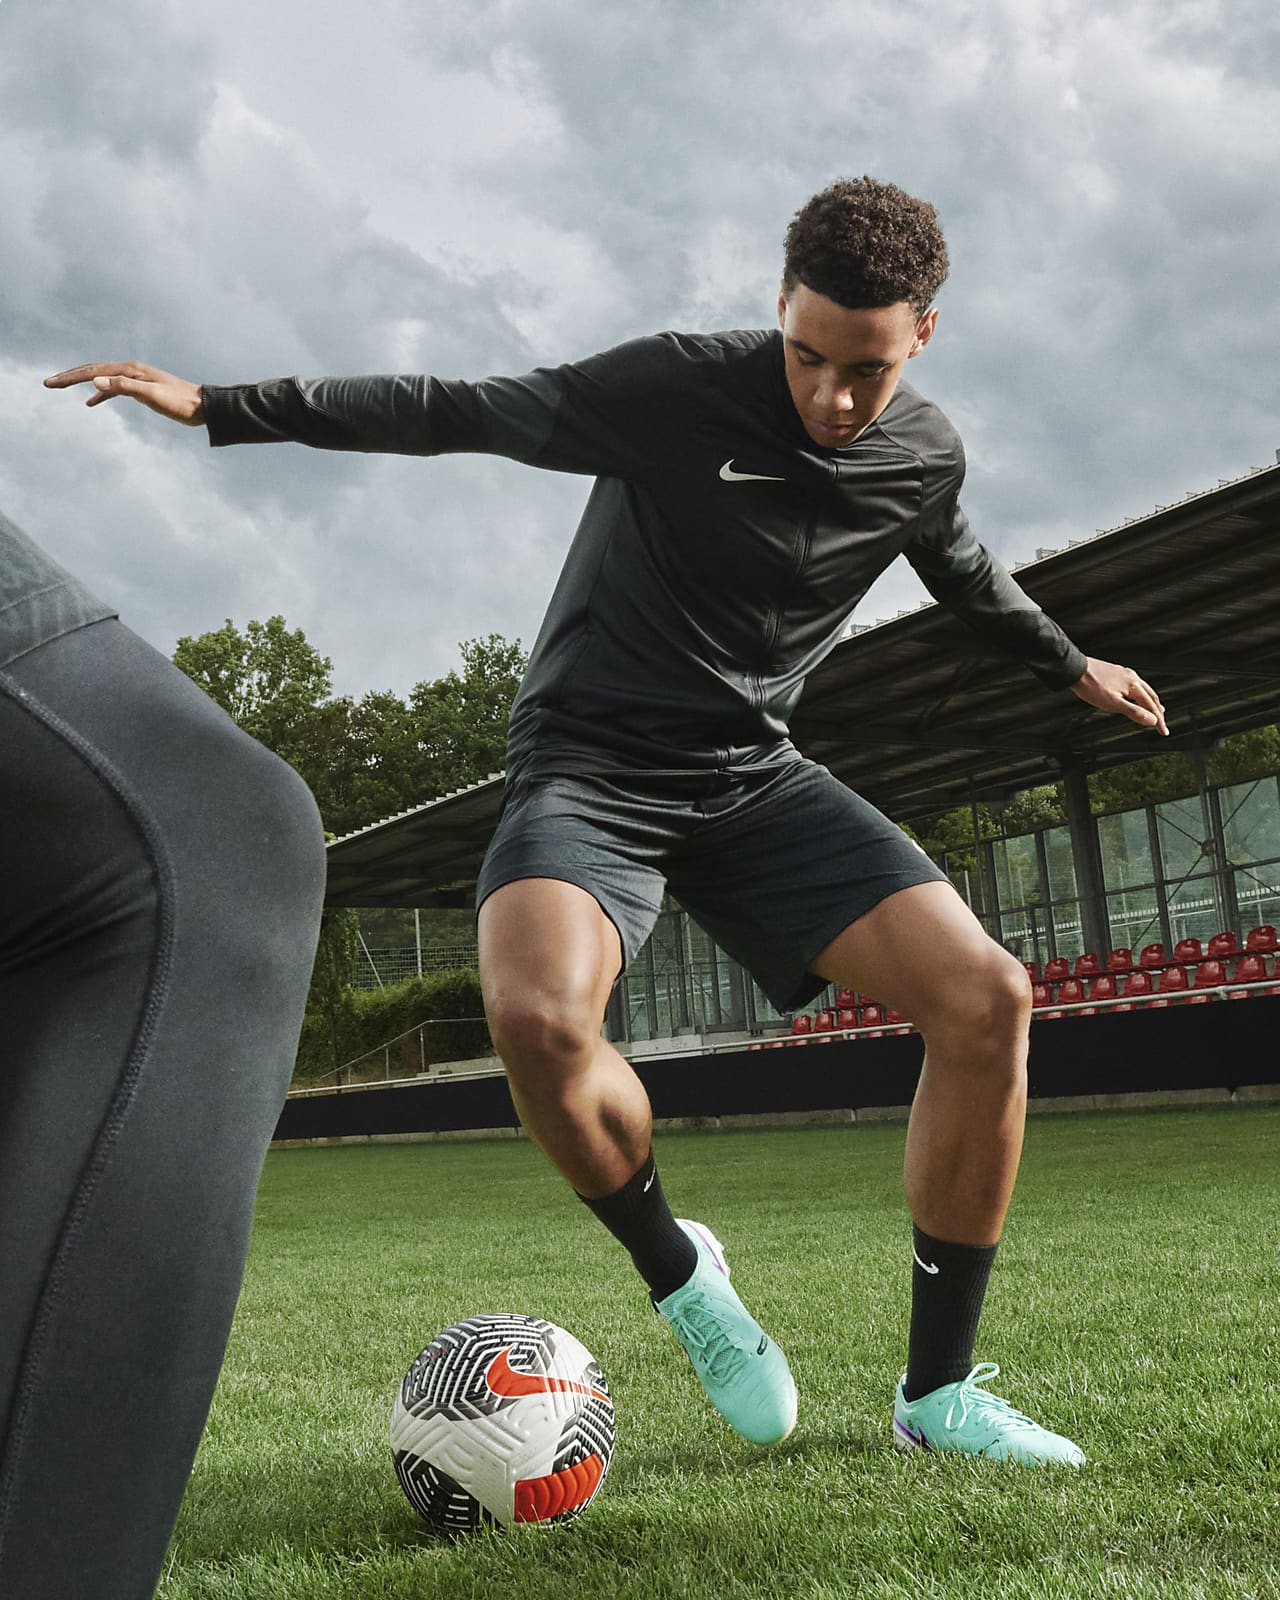 Nike Therma gants de course a pied thermiques pour homme - Soccer Sport  Fitness